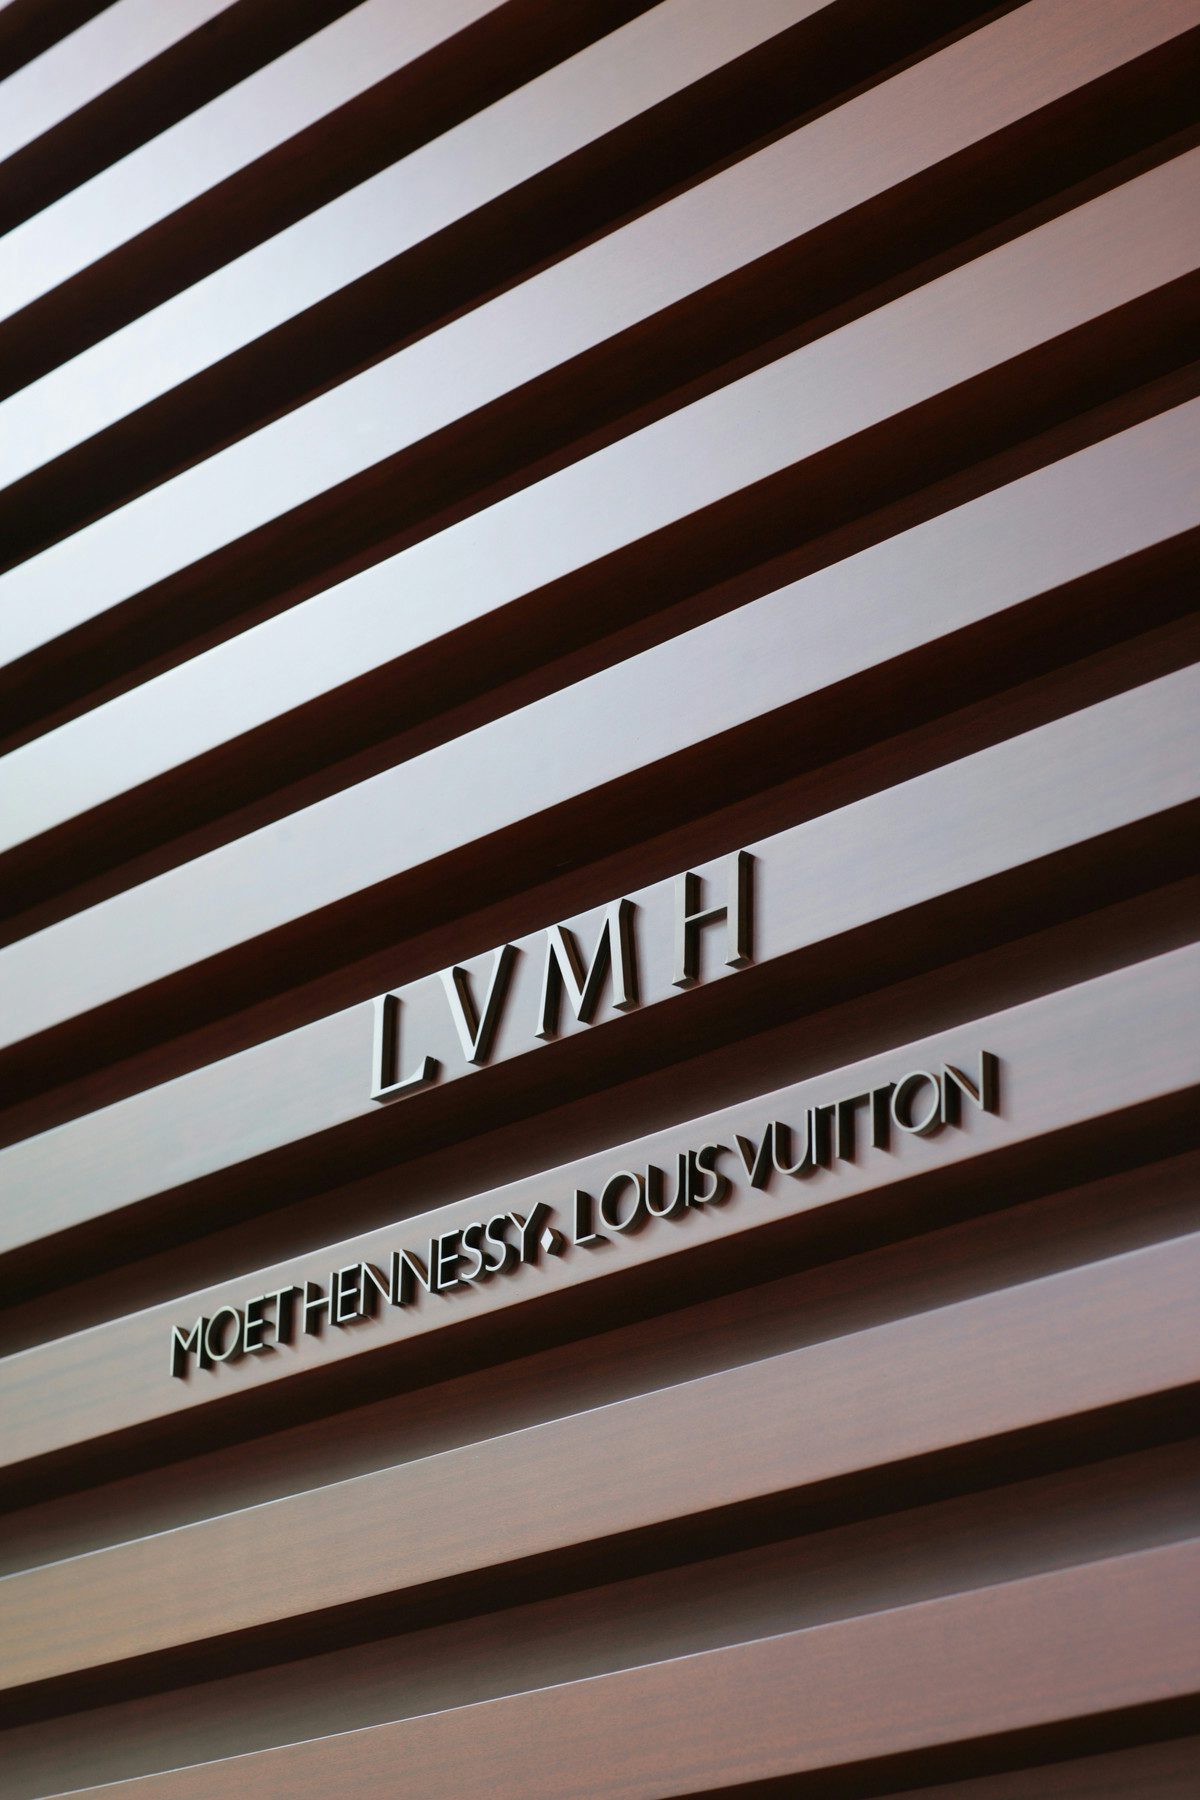 Contact Louis Vuitton Head Office